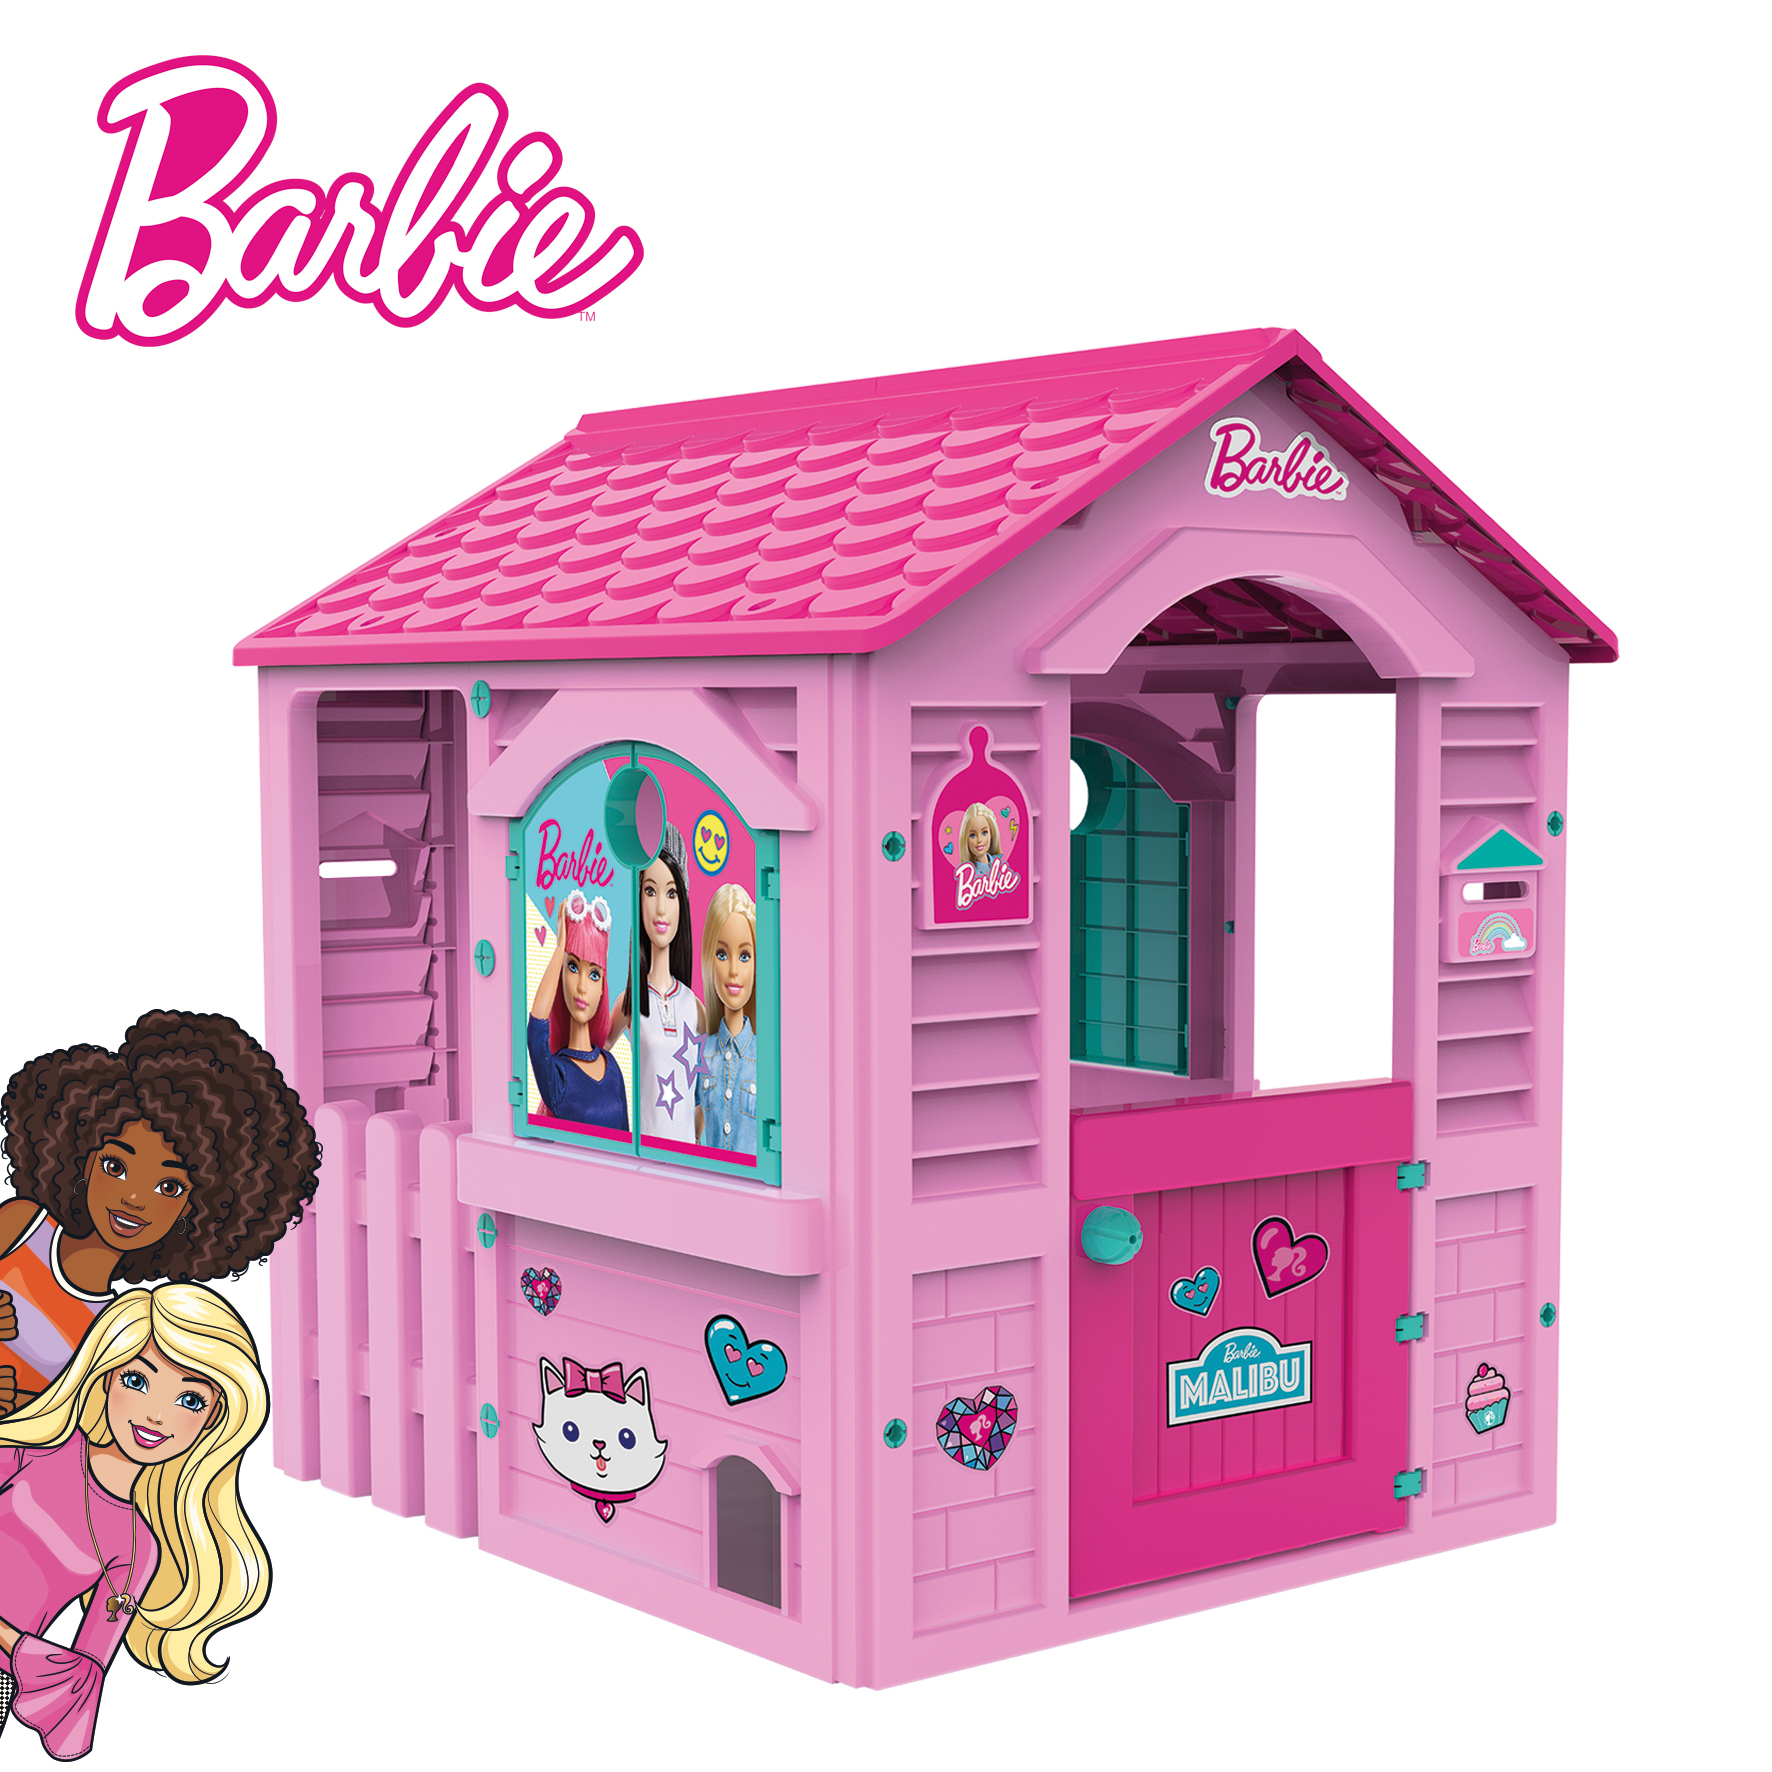 Cromático a pesar de Estallar Casita Barbie - Fábrica de Juguetes